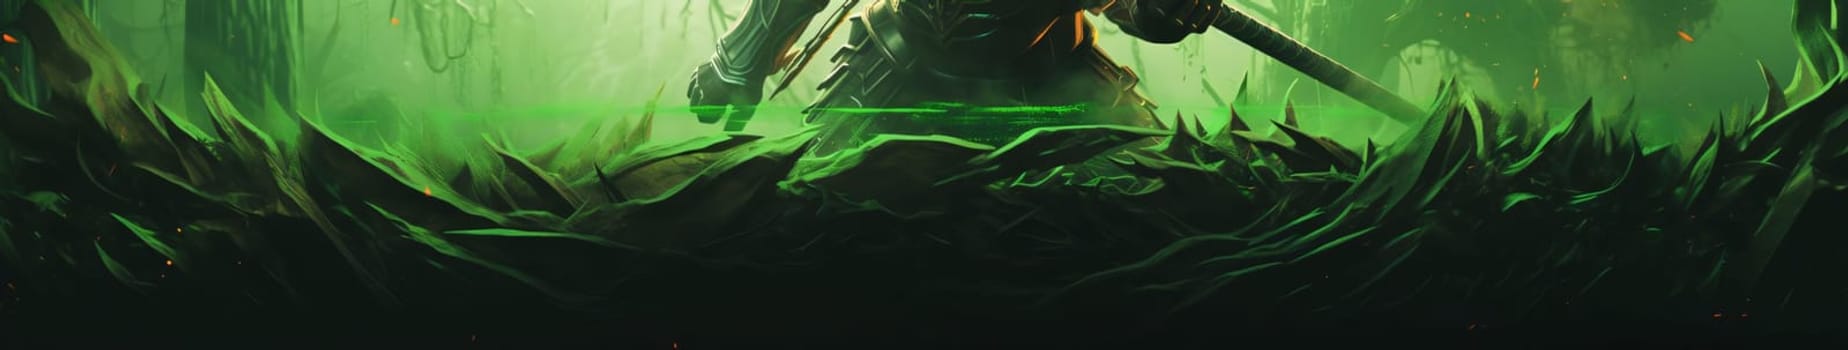 Banner: Horror background. Monster in the green forest. Halloween banner.